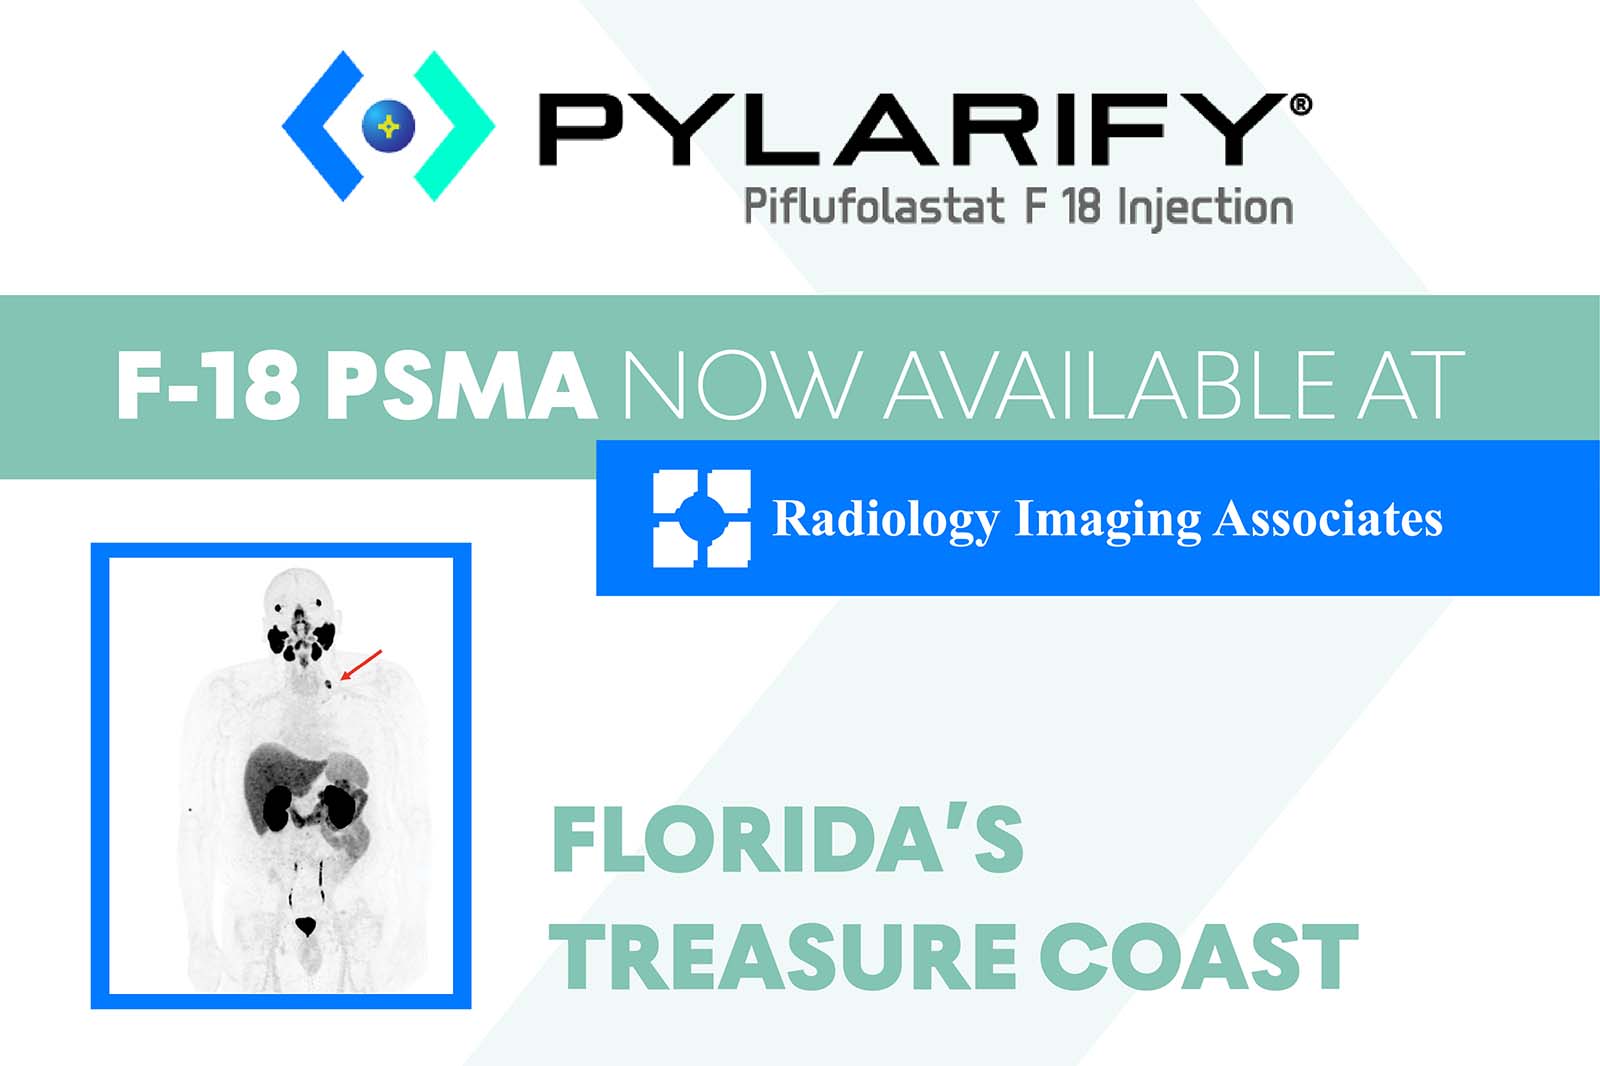  F-18 PSMA PET/CT, Radiology Imaging Associates